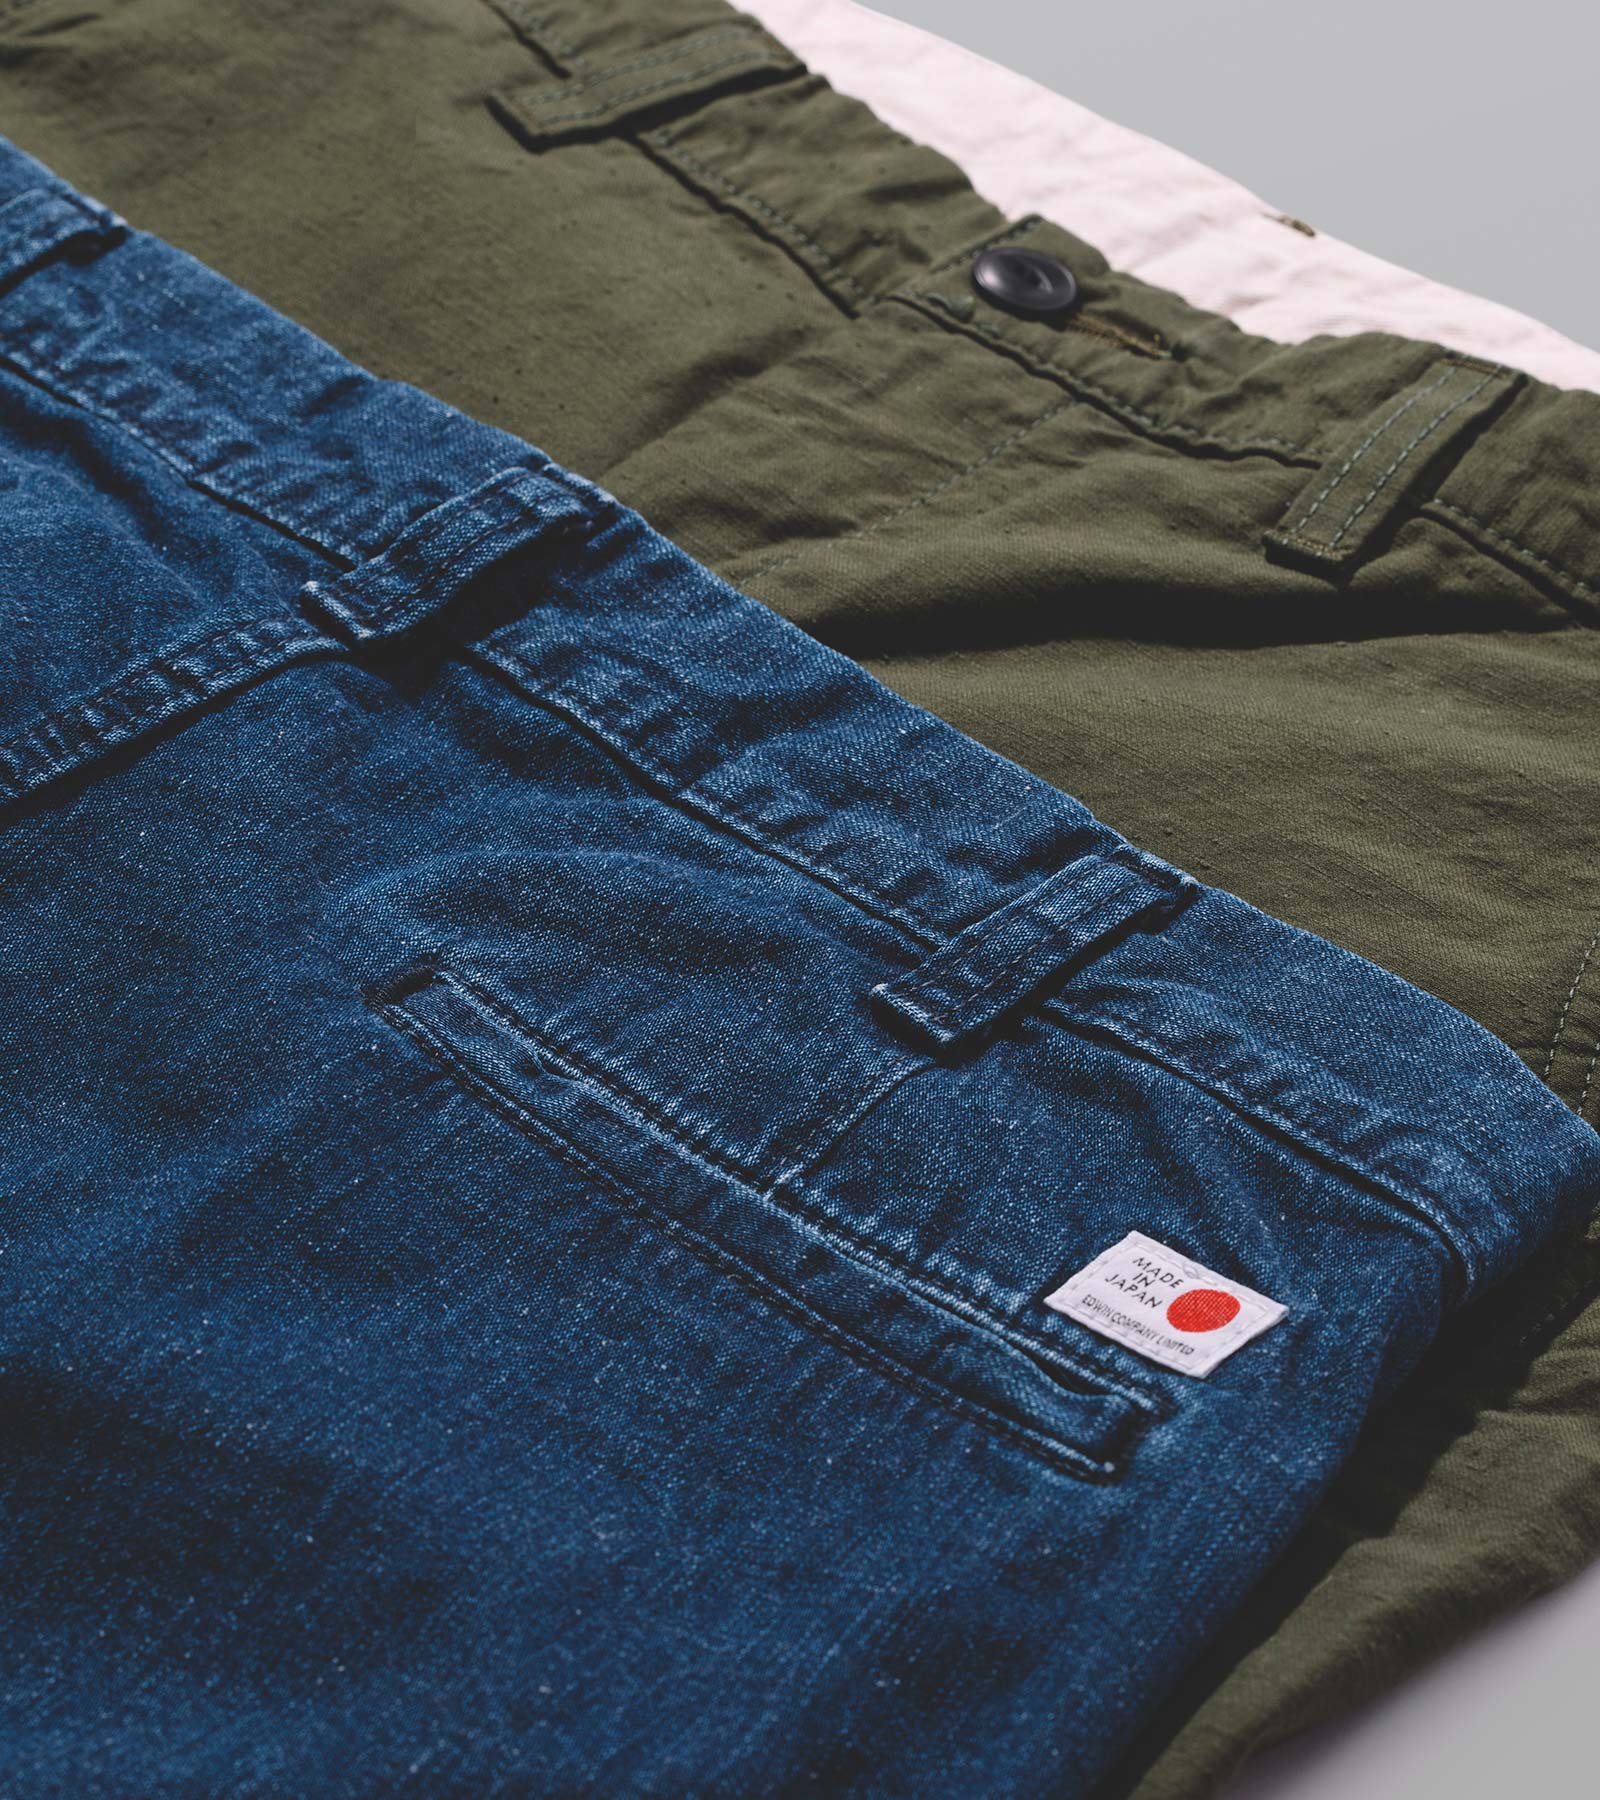 jp jeans company